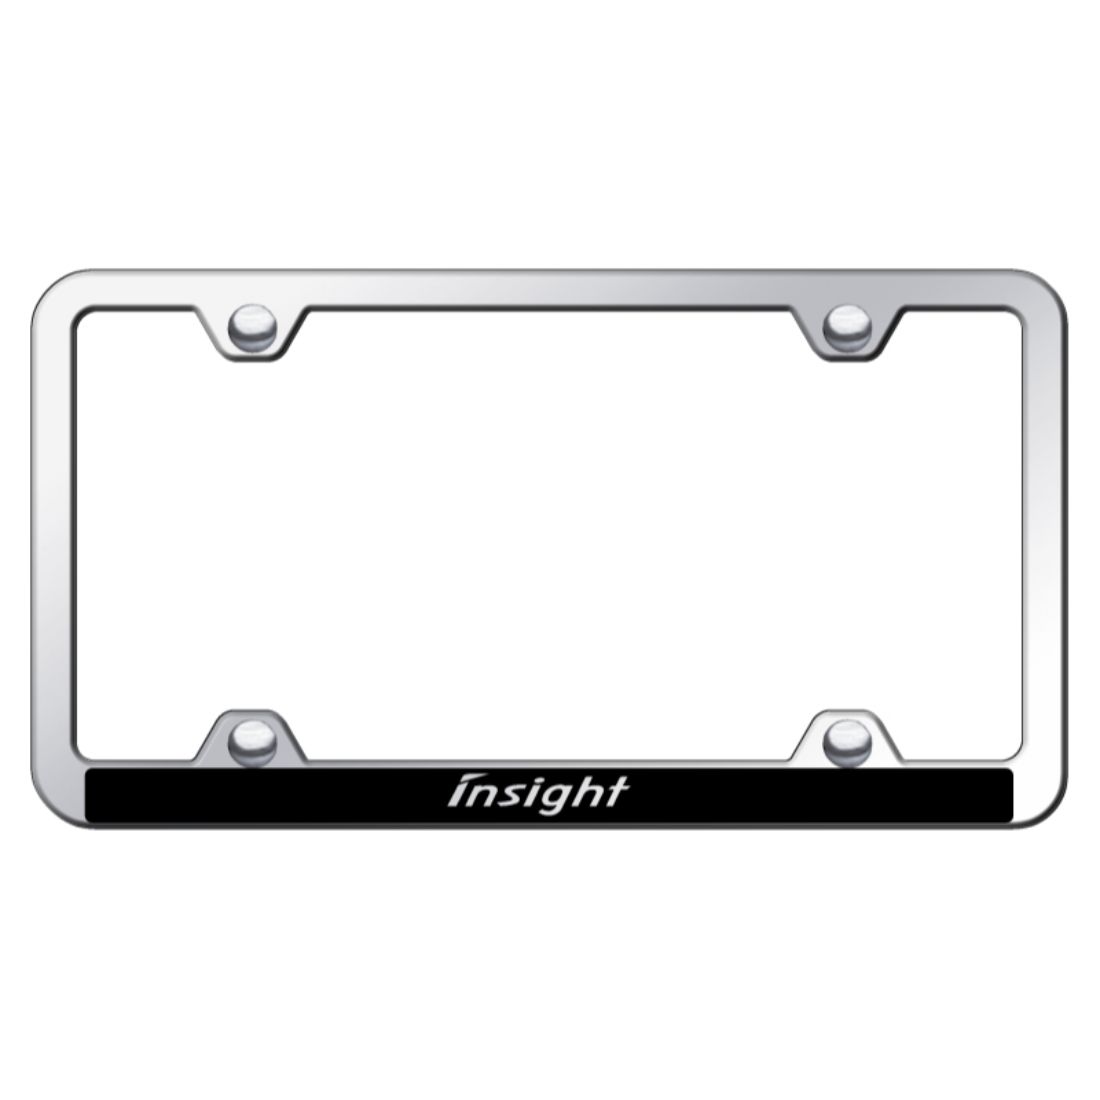 Honda Insight Chrome with Black Plastic License Plate Frame | eBay